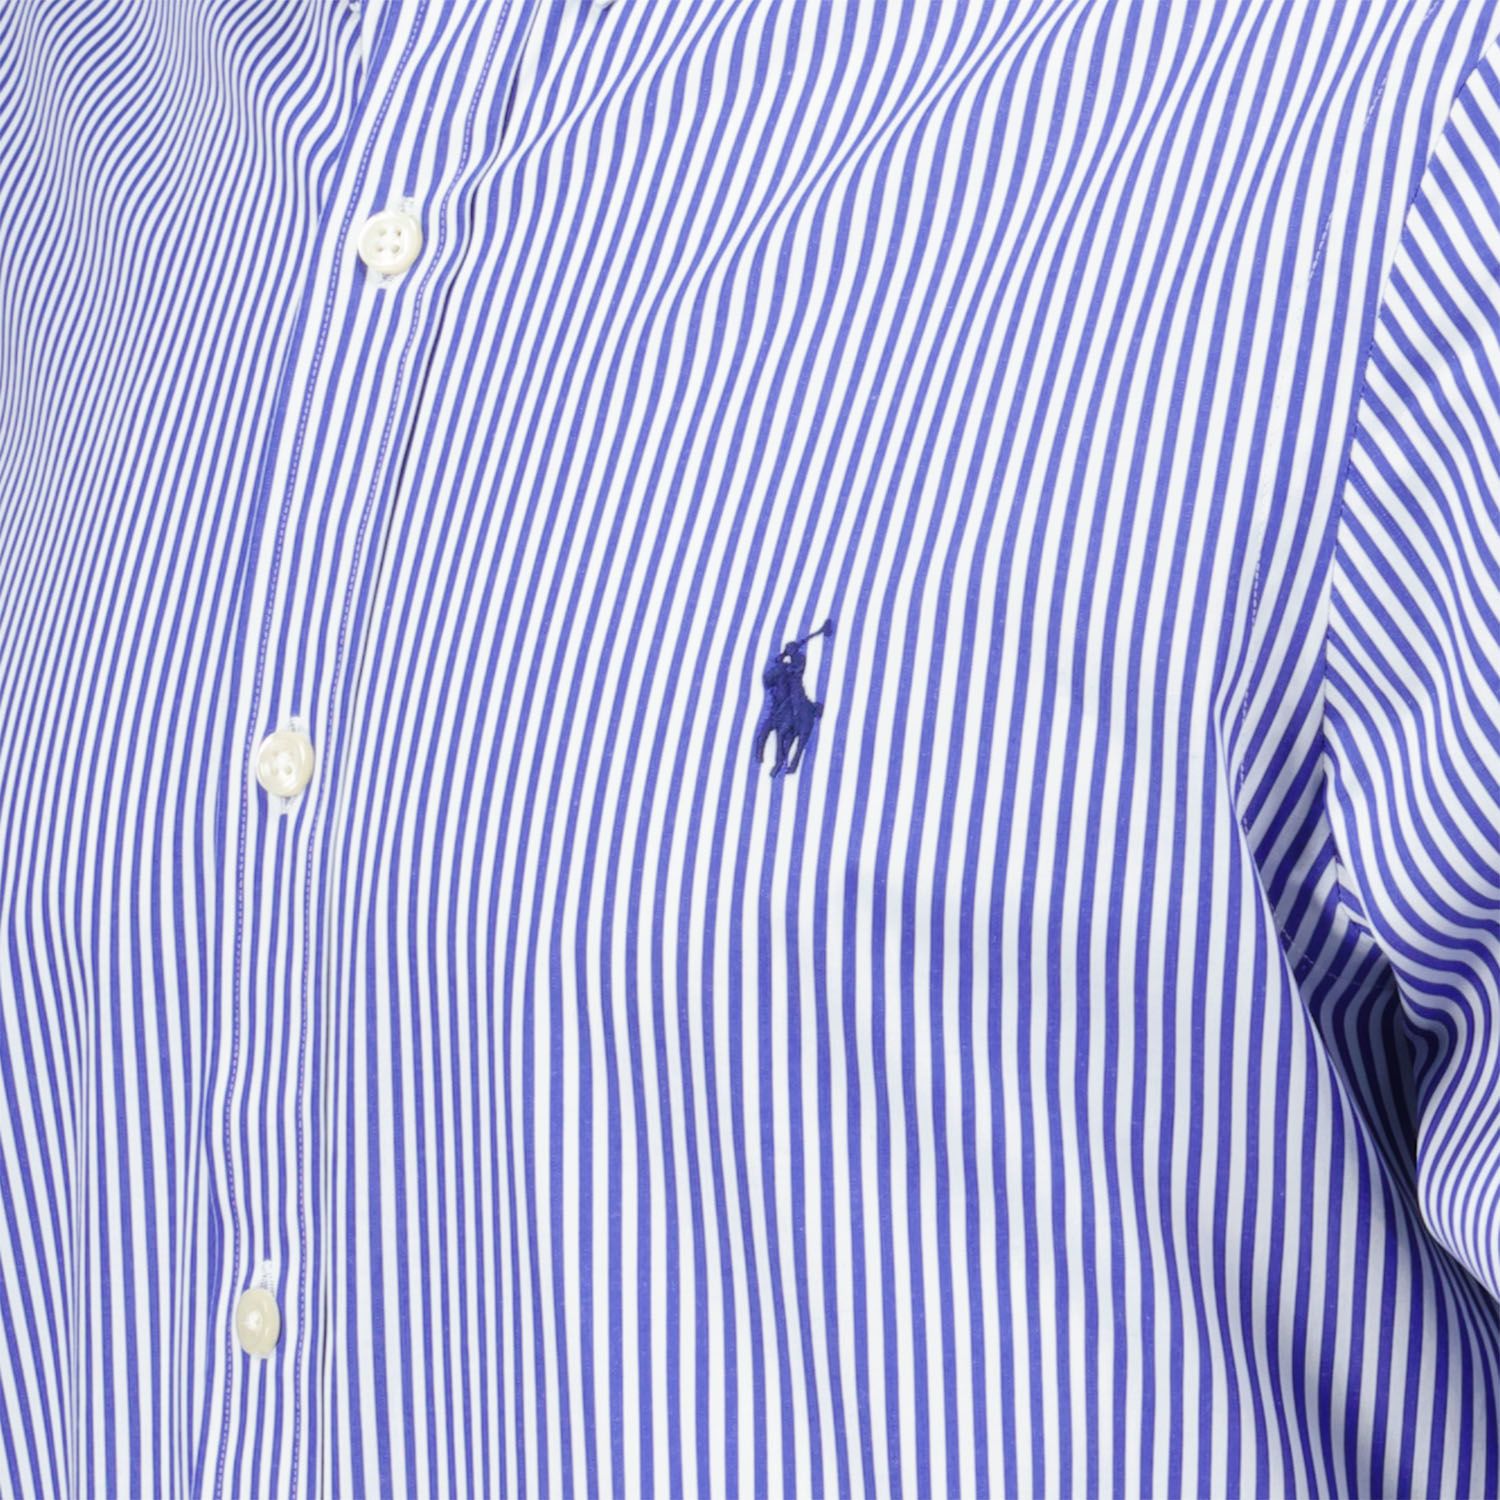 Polo Ralph Lauren Overhemd Blauw